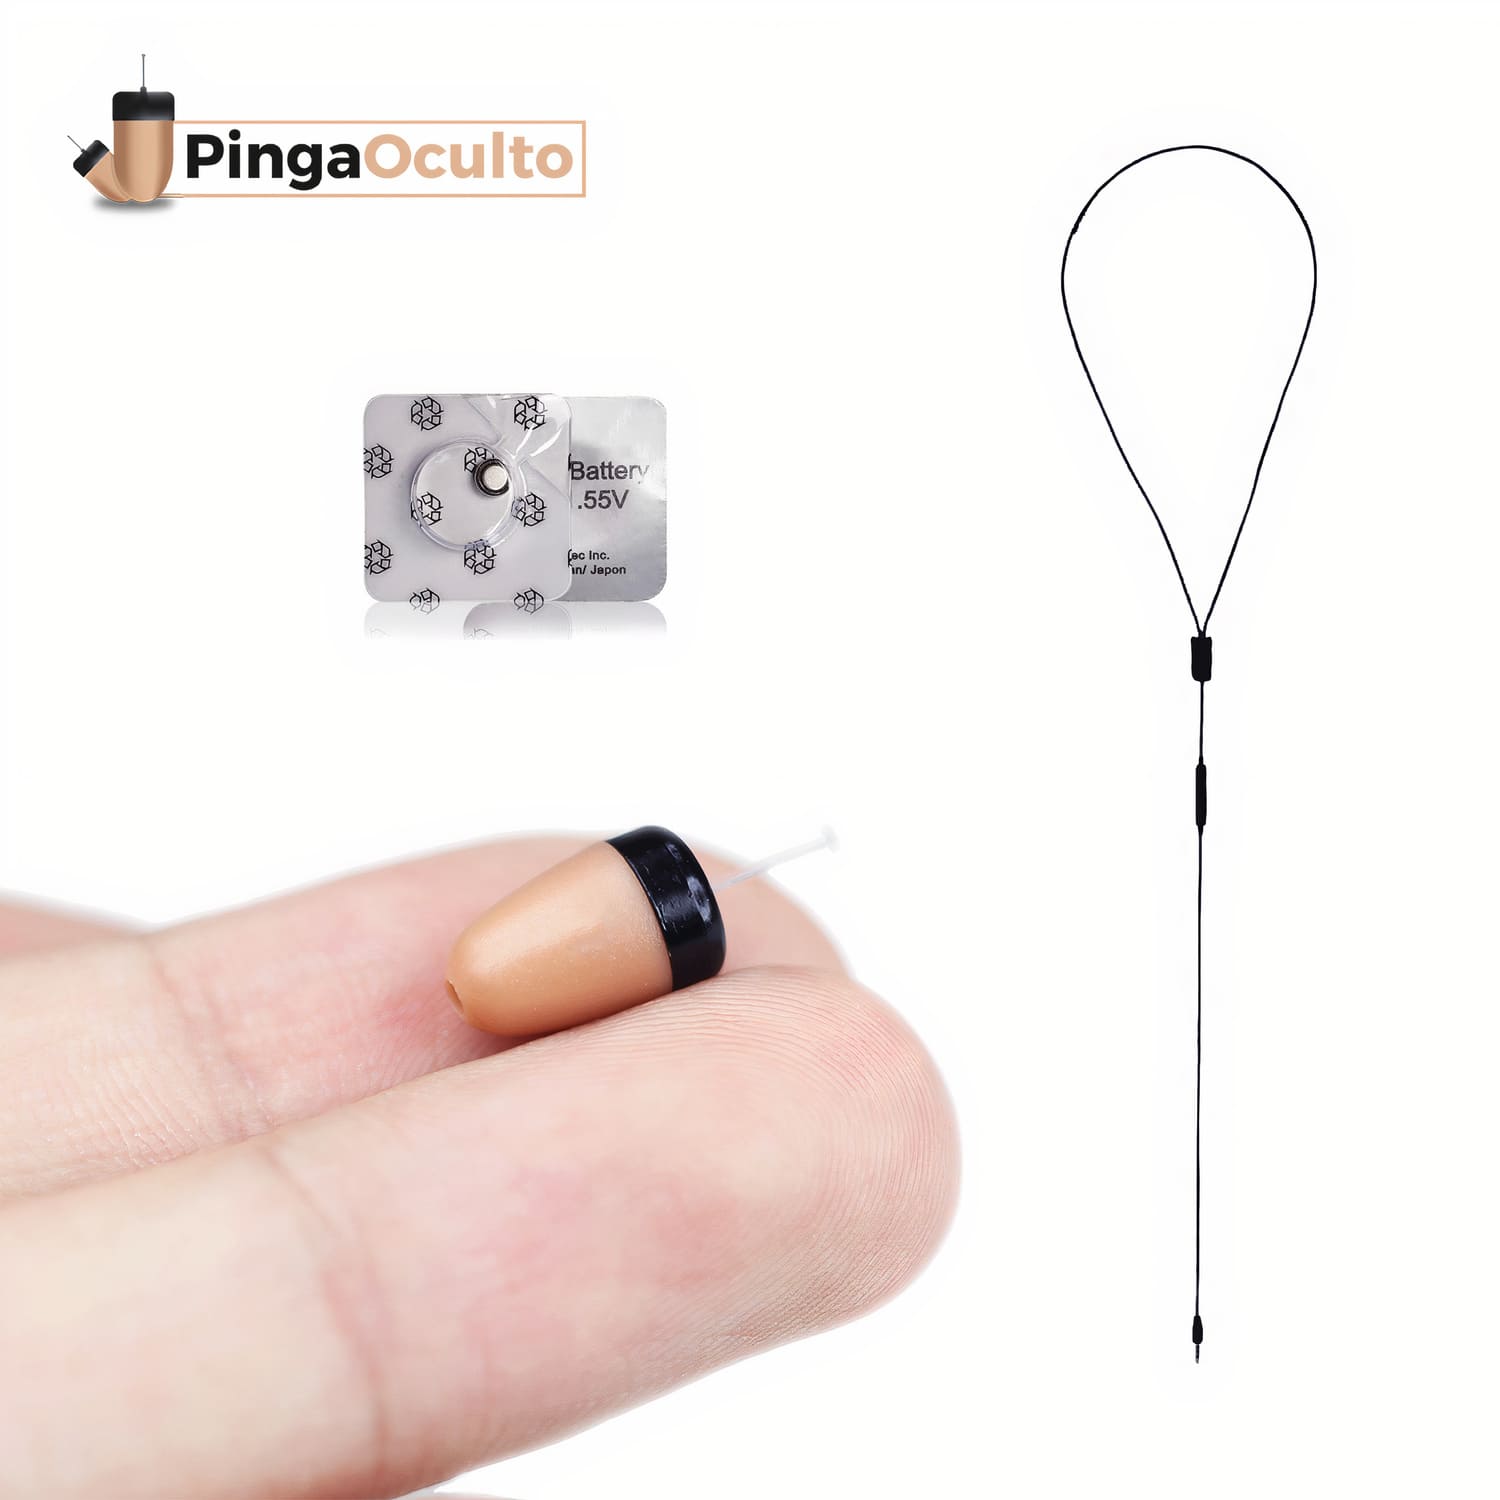 Pinganillo Vip Pro Mini - PingaOculto ®